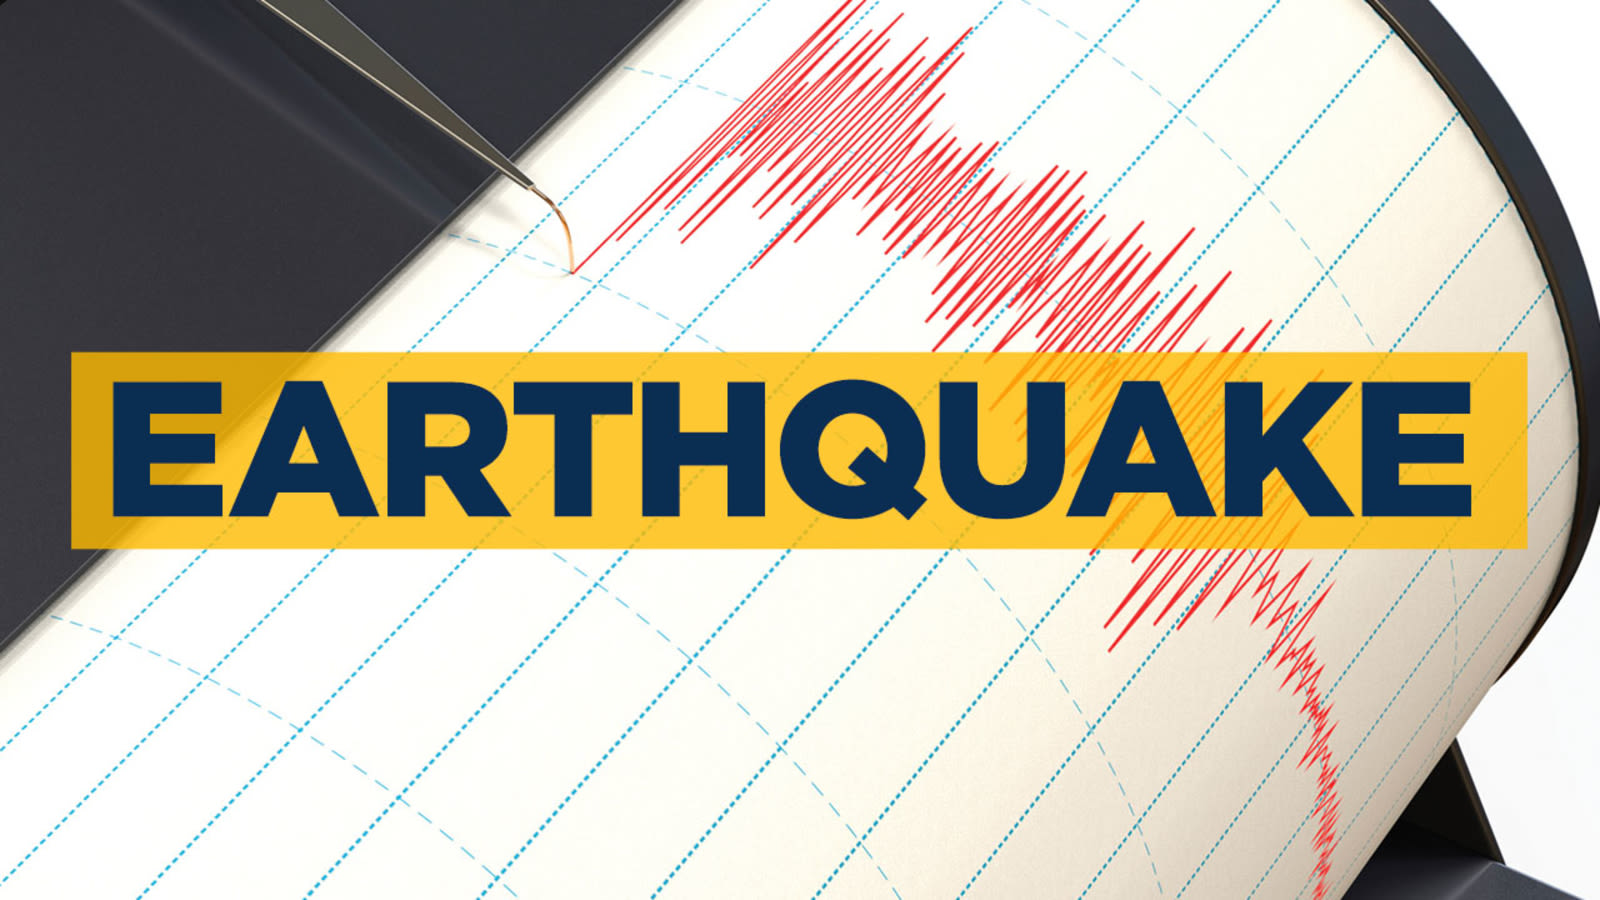 3.5 magnitude earthquake rattles South Pasadena area, USGS says